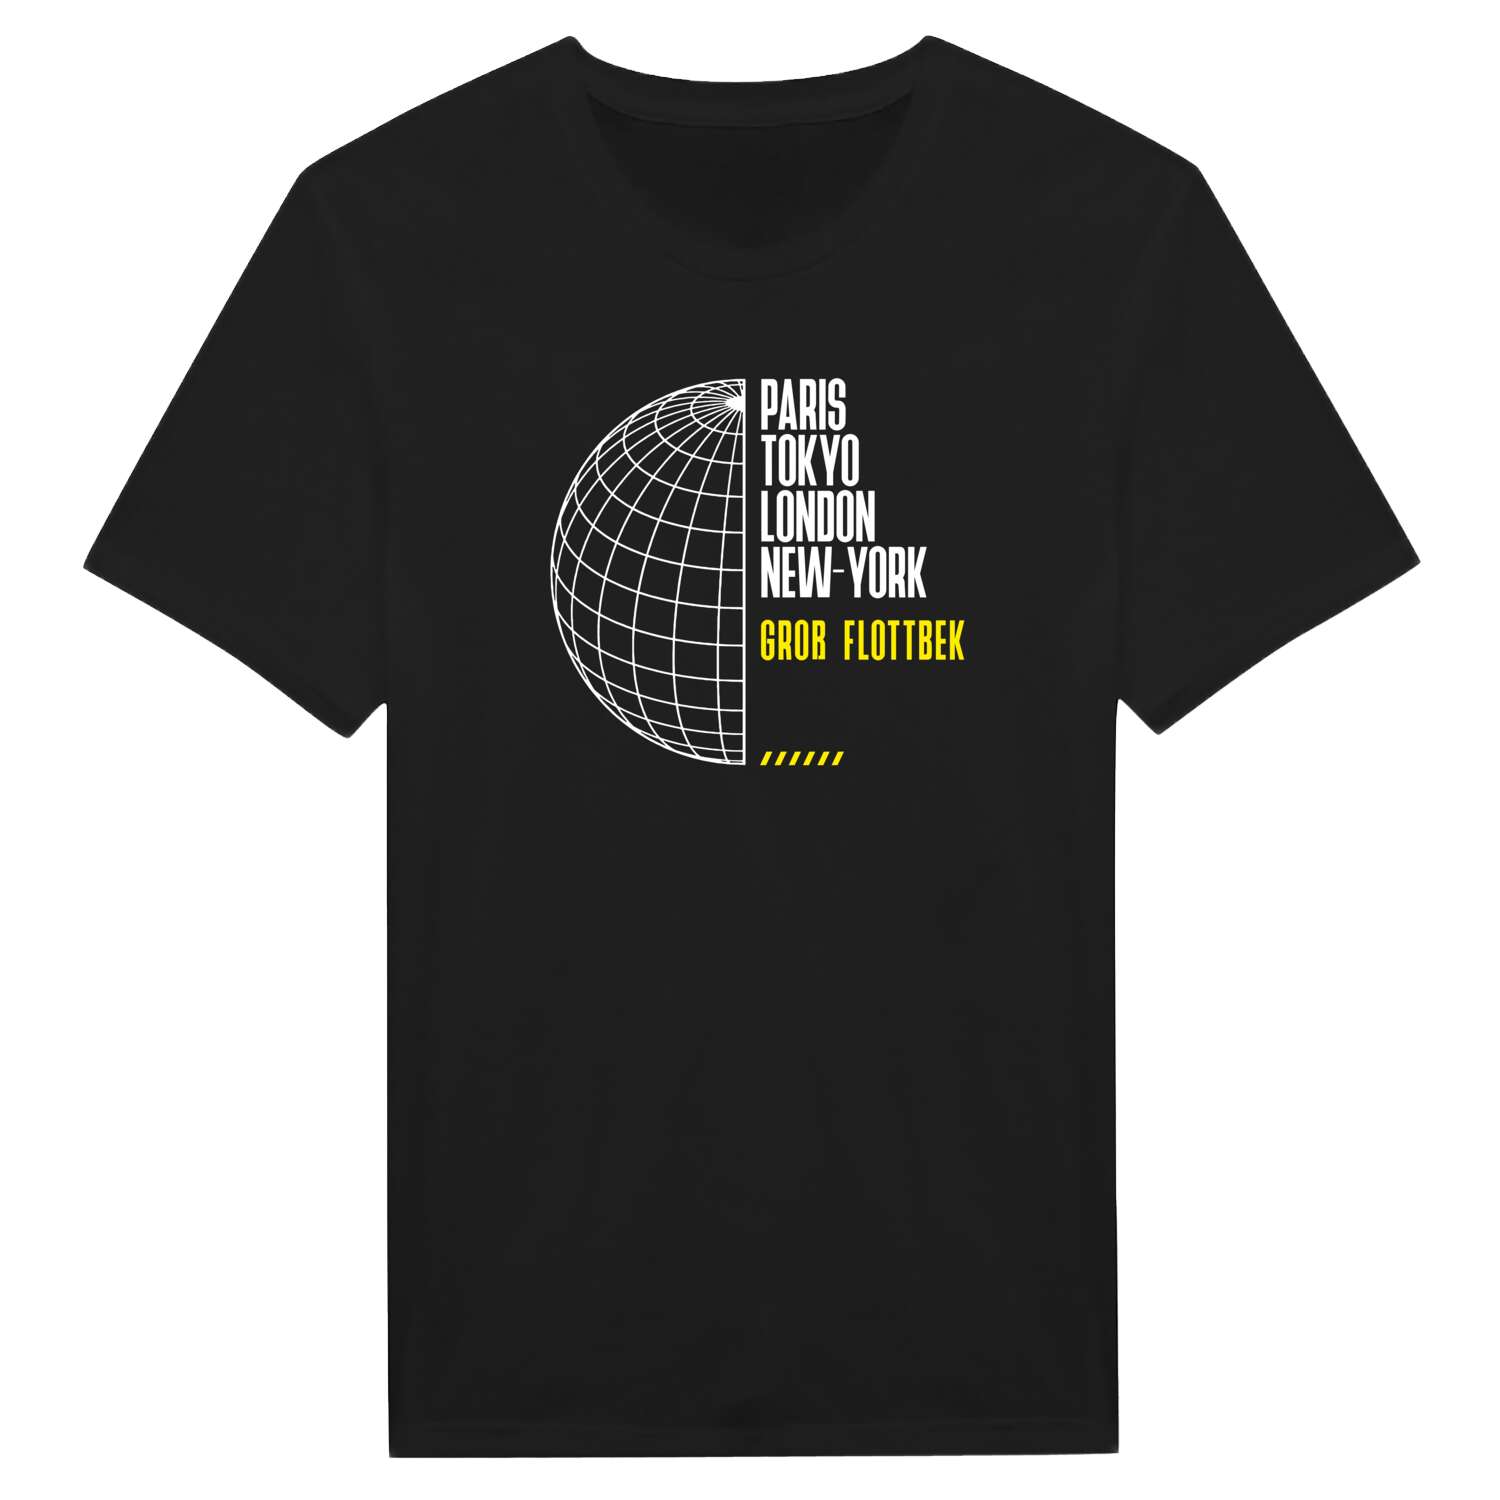 Groß Flottbek T-Shirt »Paris Tokyo London«